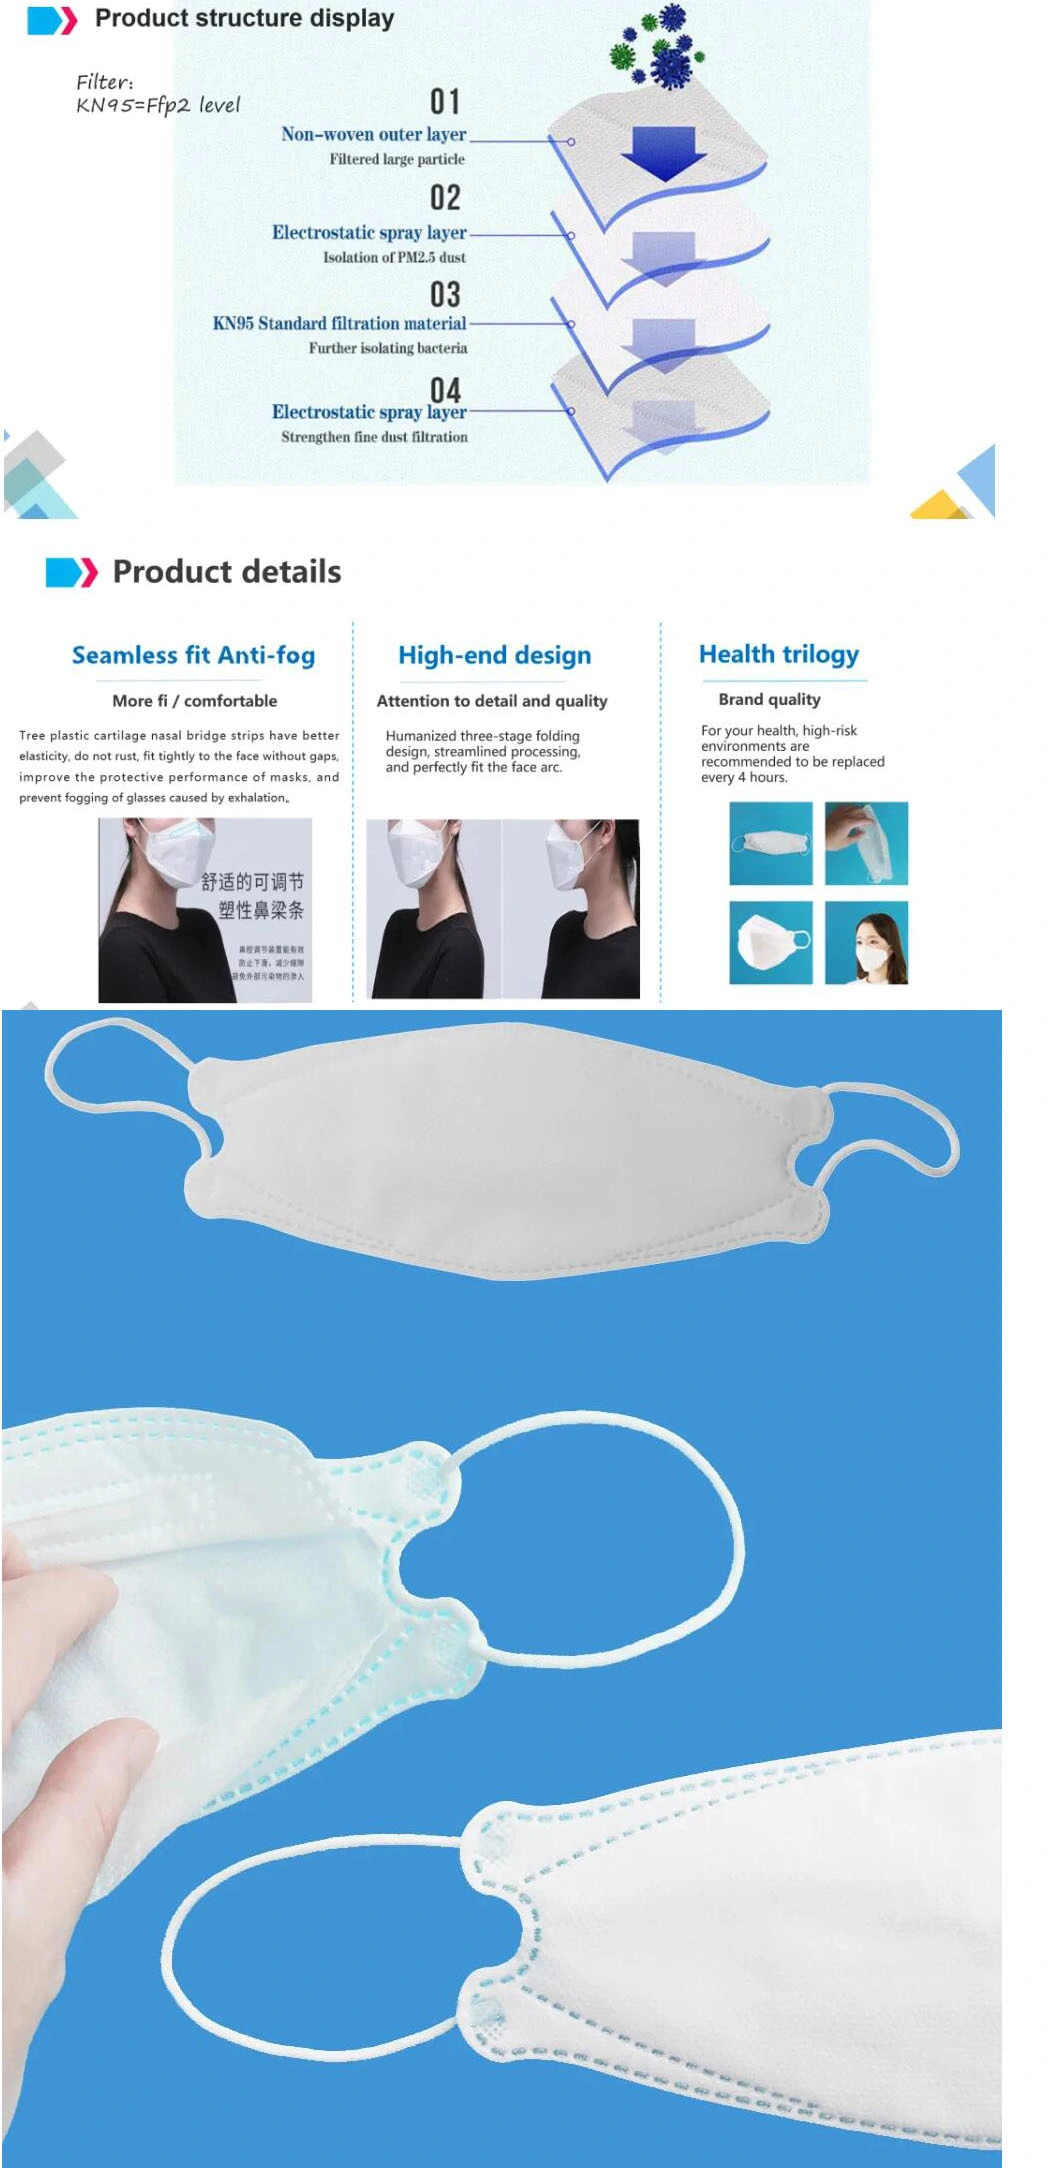 Fish Mask, N95/FFP2 Mask, KN95 Material Mask, Respirator, Respirator, Respirator, Respirator.